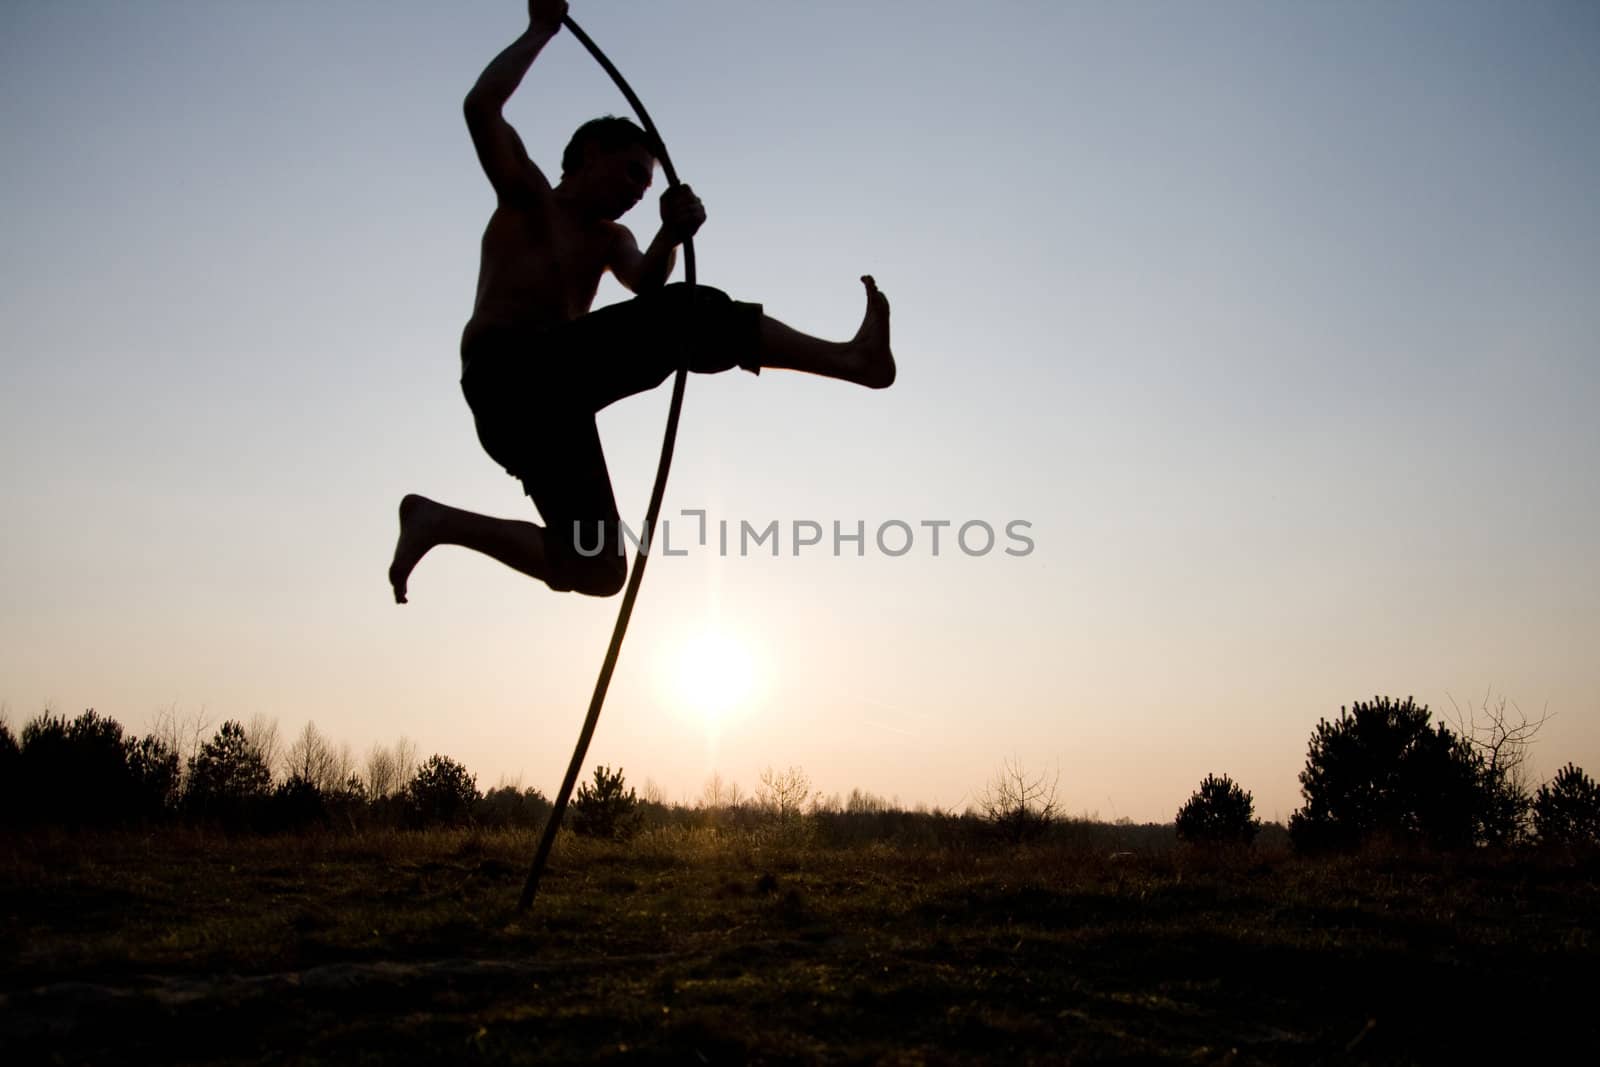 The jumping person by KadunmatriX